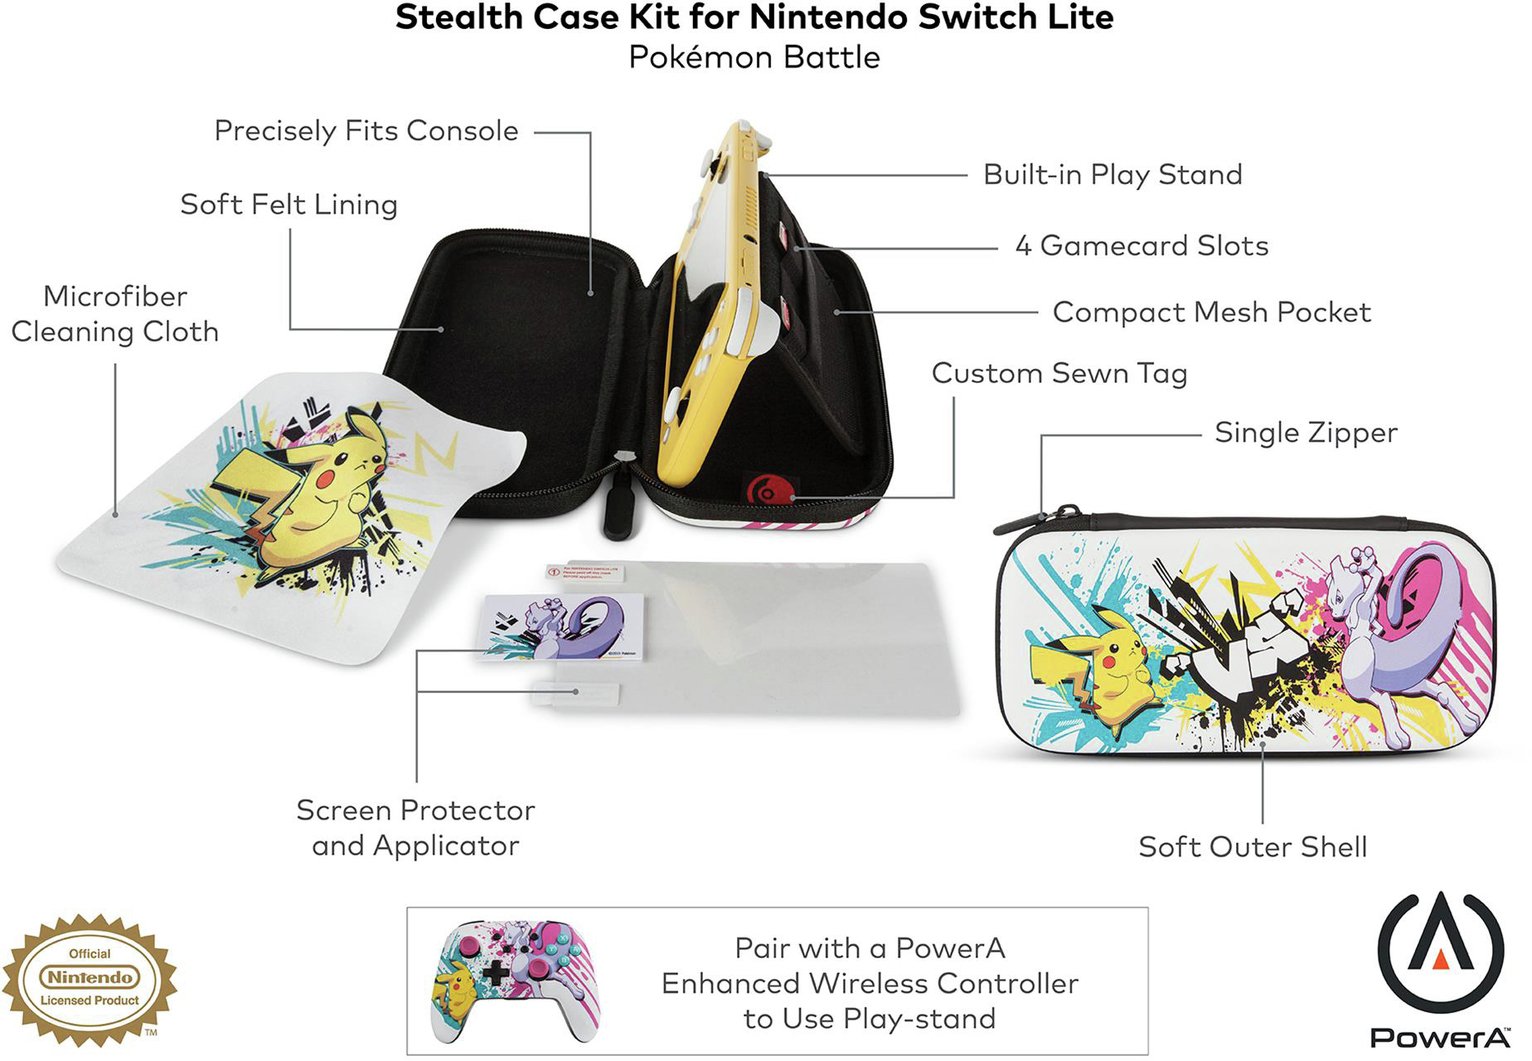 Stealth Nintendo Switch Lite Pokemon Battle Case Kit Review